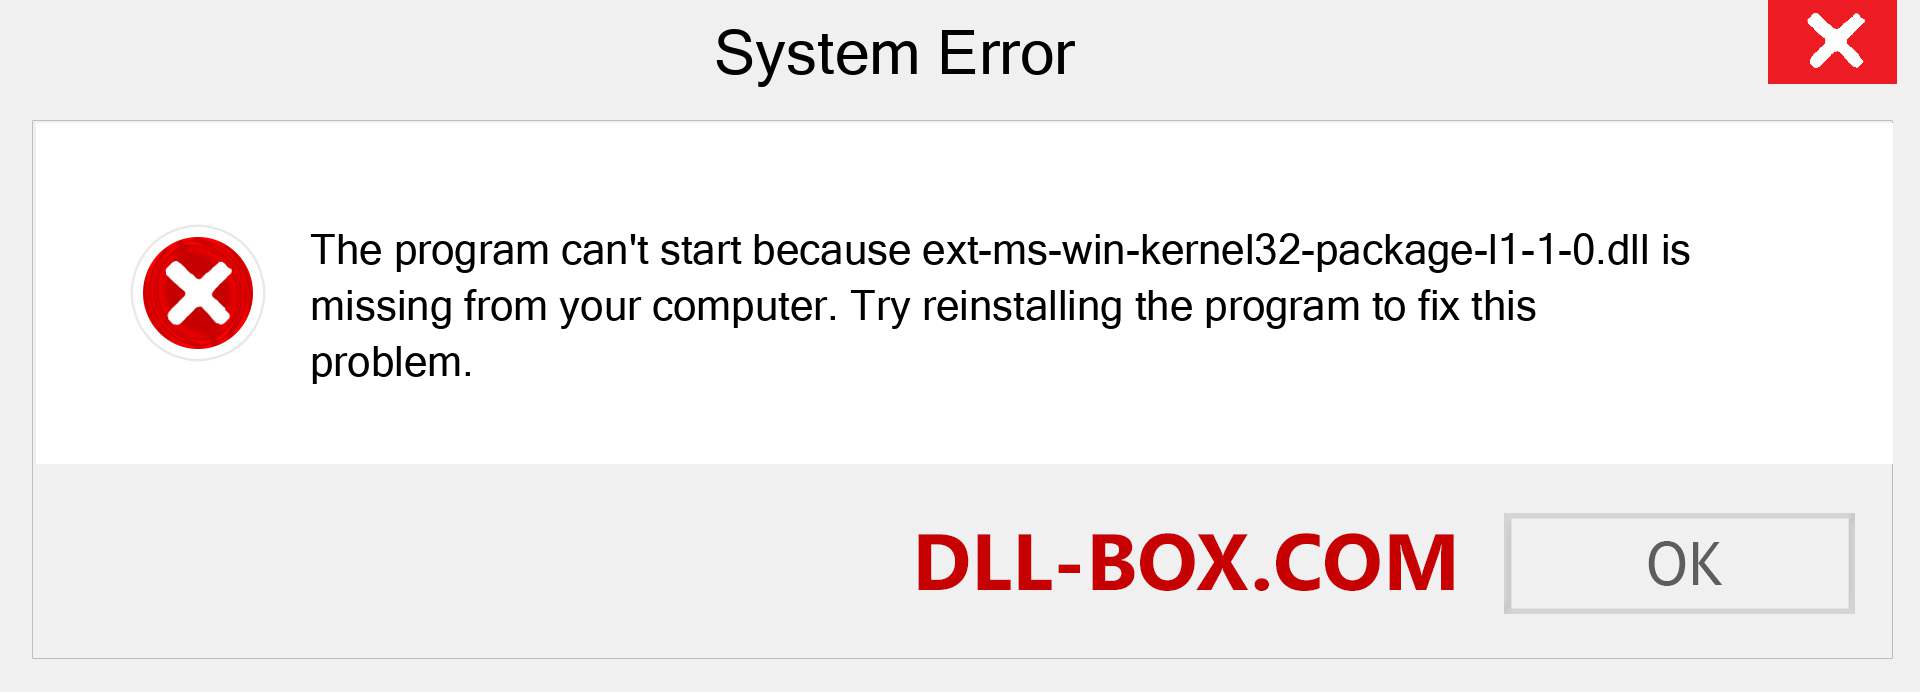  ext-ms-win-kernel32-package-l1-1-0.dll file is missing?. Download for Windows 7, 8, 10 - Fix  ext-ms-win-kernel32-package-l1-1-0 dll Missing Error on Windows, photos, images